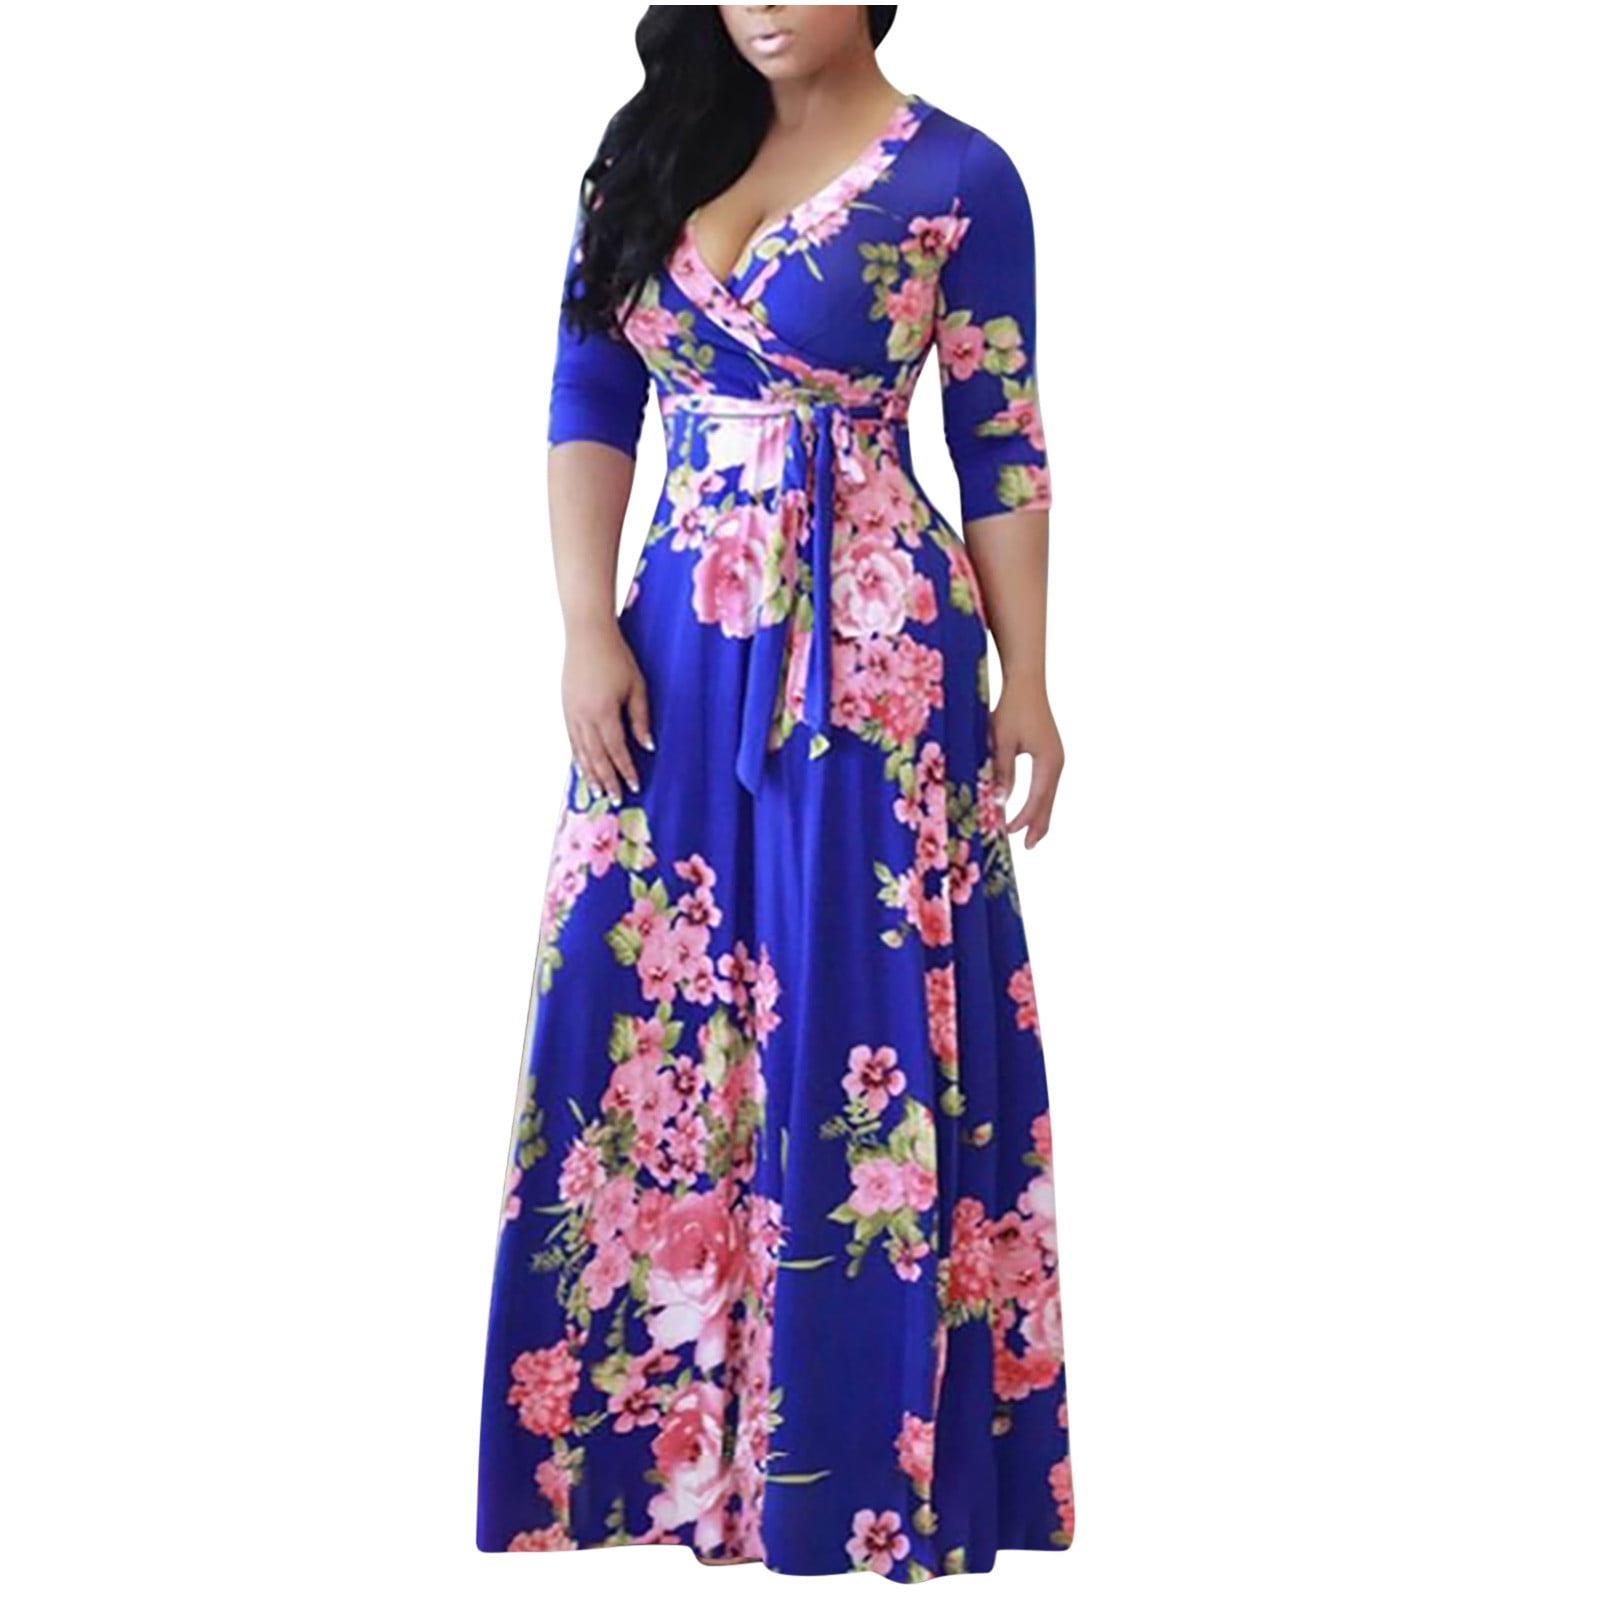 ORT Summer Dresses for Women Plus Size V Neck Floral Print Boho Maxi Dress Wrap Dress Casual Beach Party Sundress 